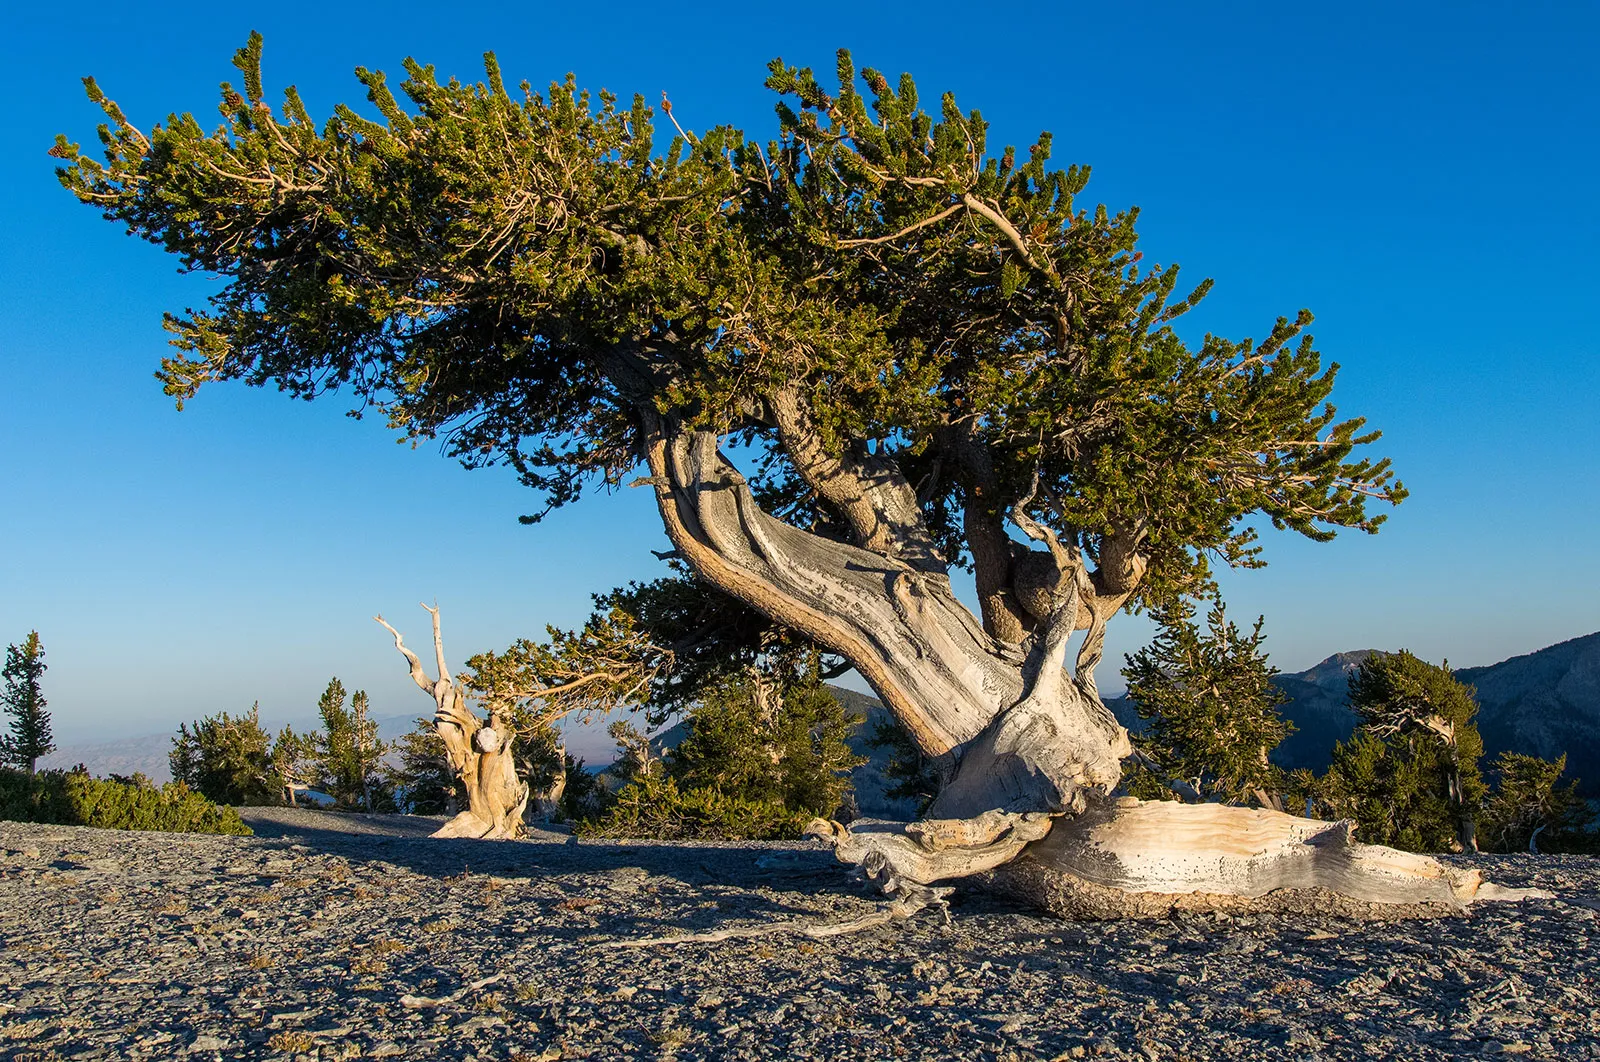 The Prometheus tree in bristlecone pine